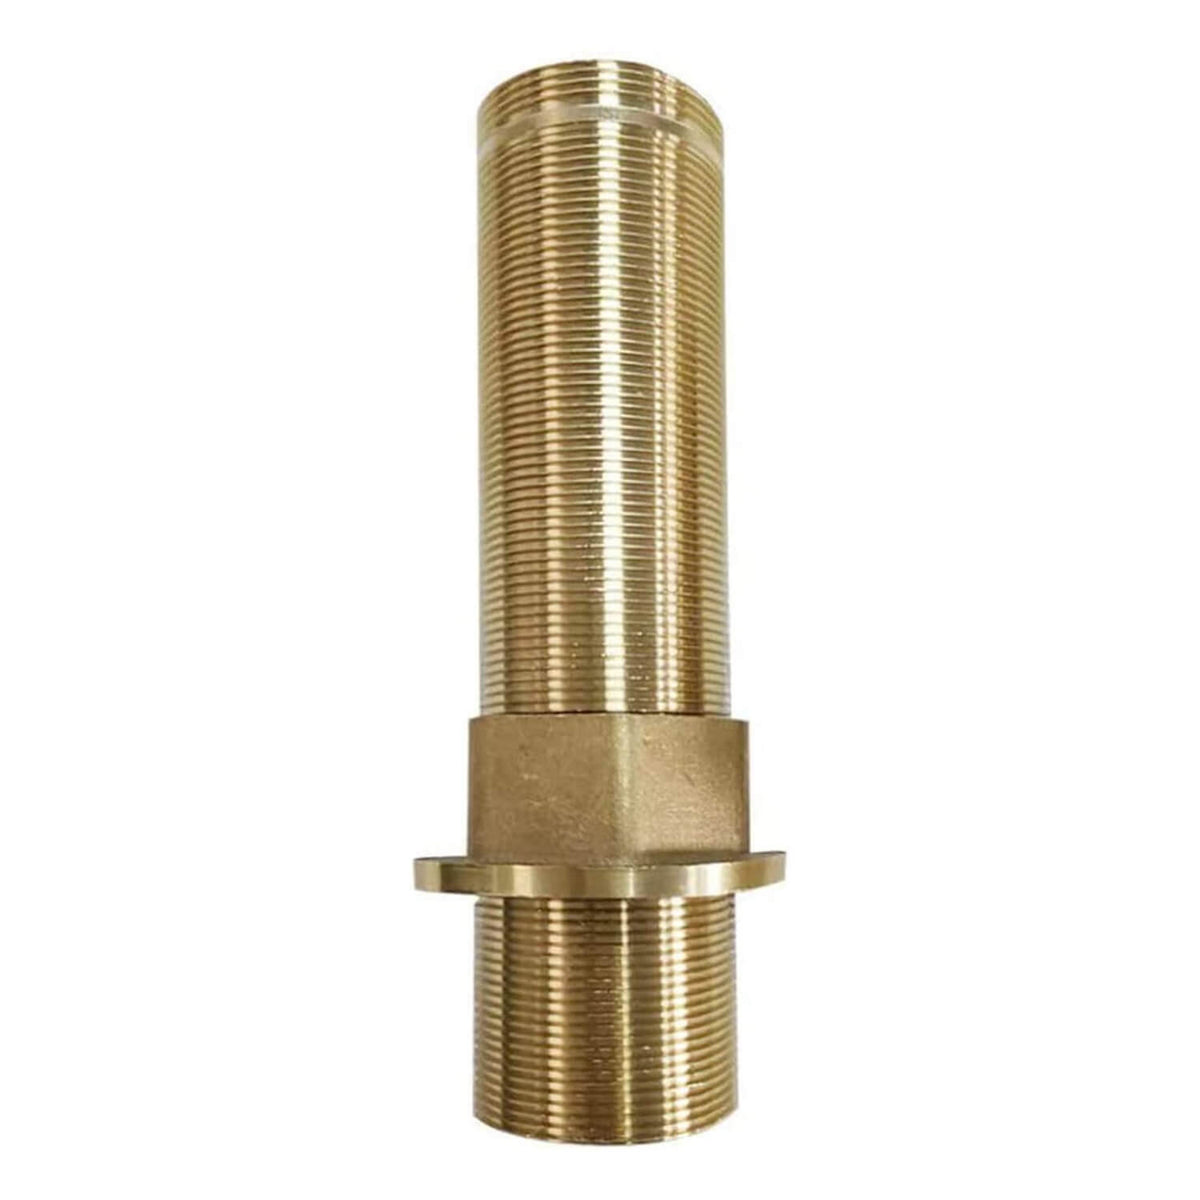 gotonovo Faucet Fittings Nipple Locknut Kit Extension Threaded Pipe Lo